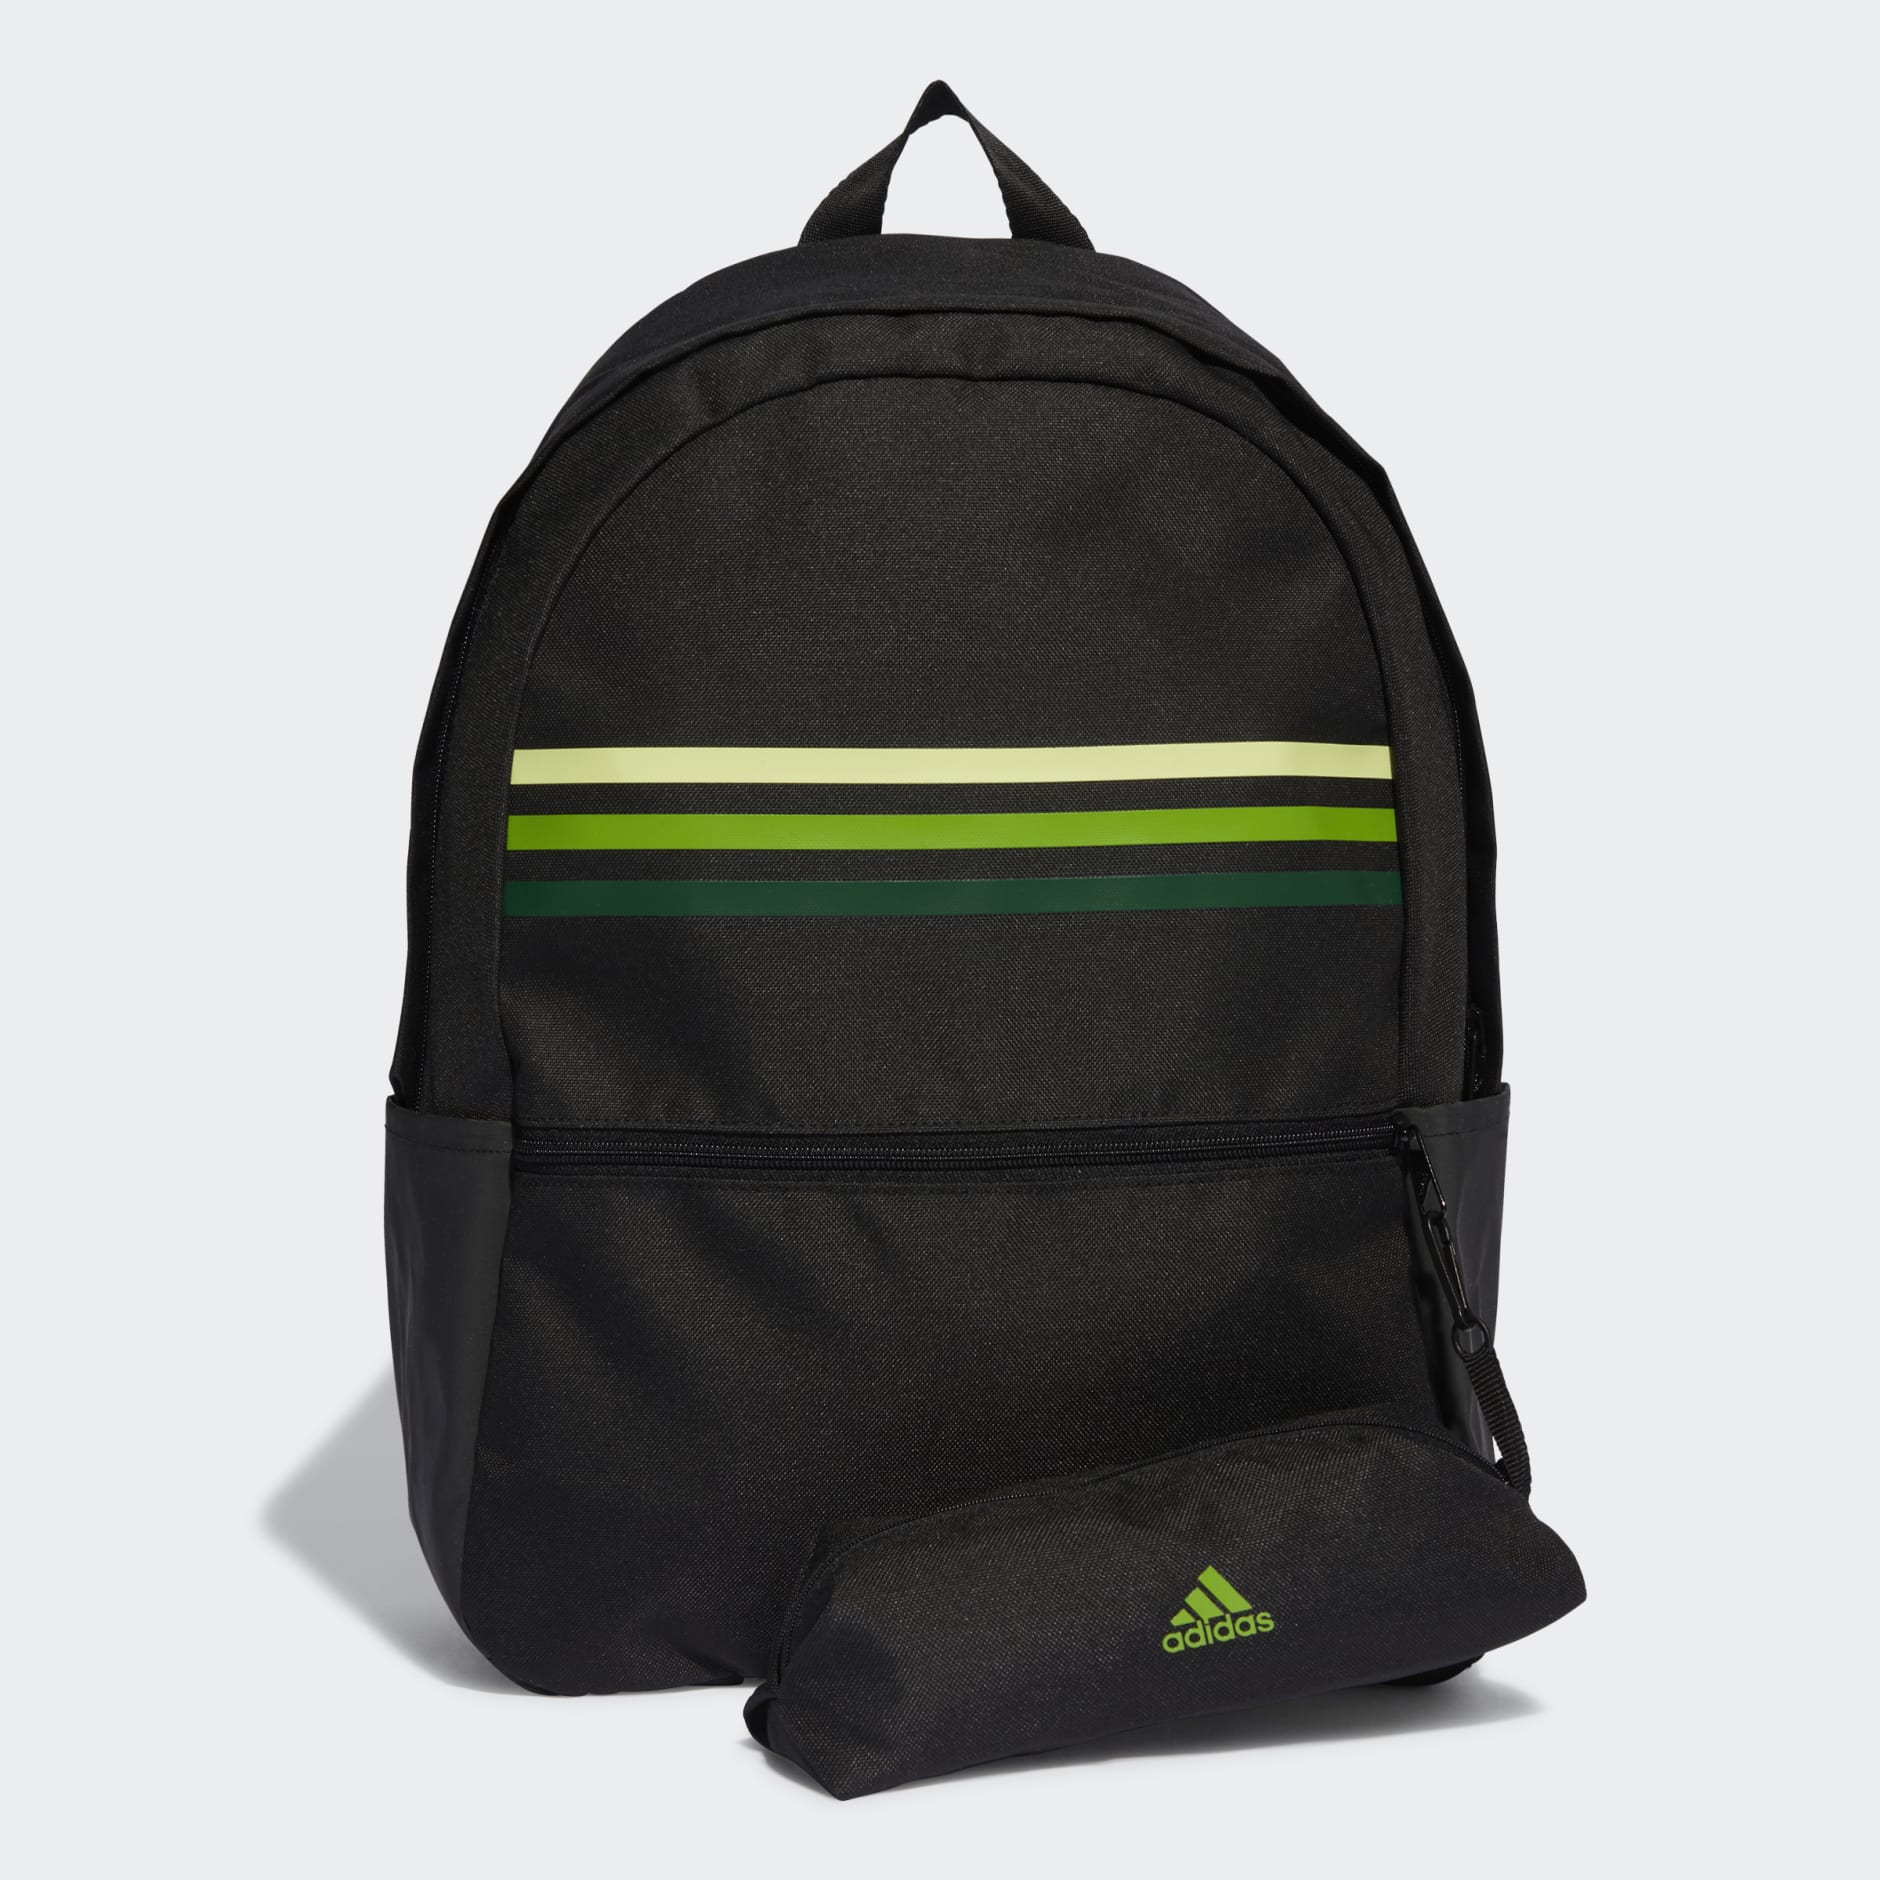 Vago garrapata Subtropical adidas Classic Horizontal 3-Stripes Backpack - Black | adidas OM